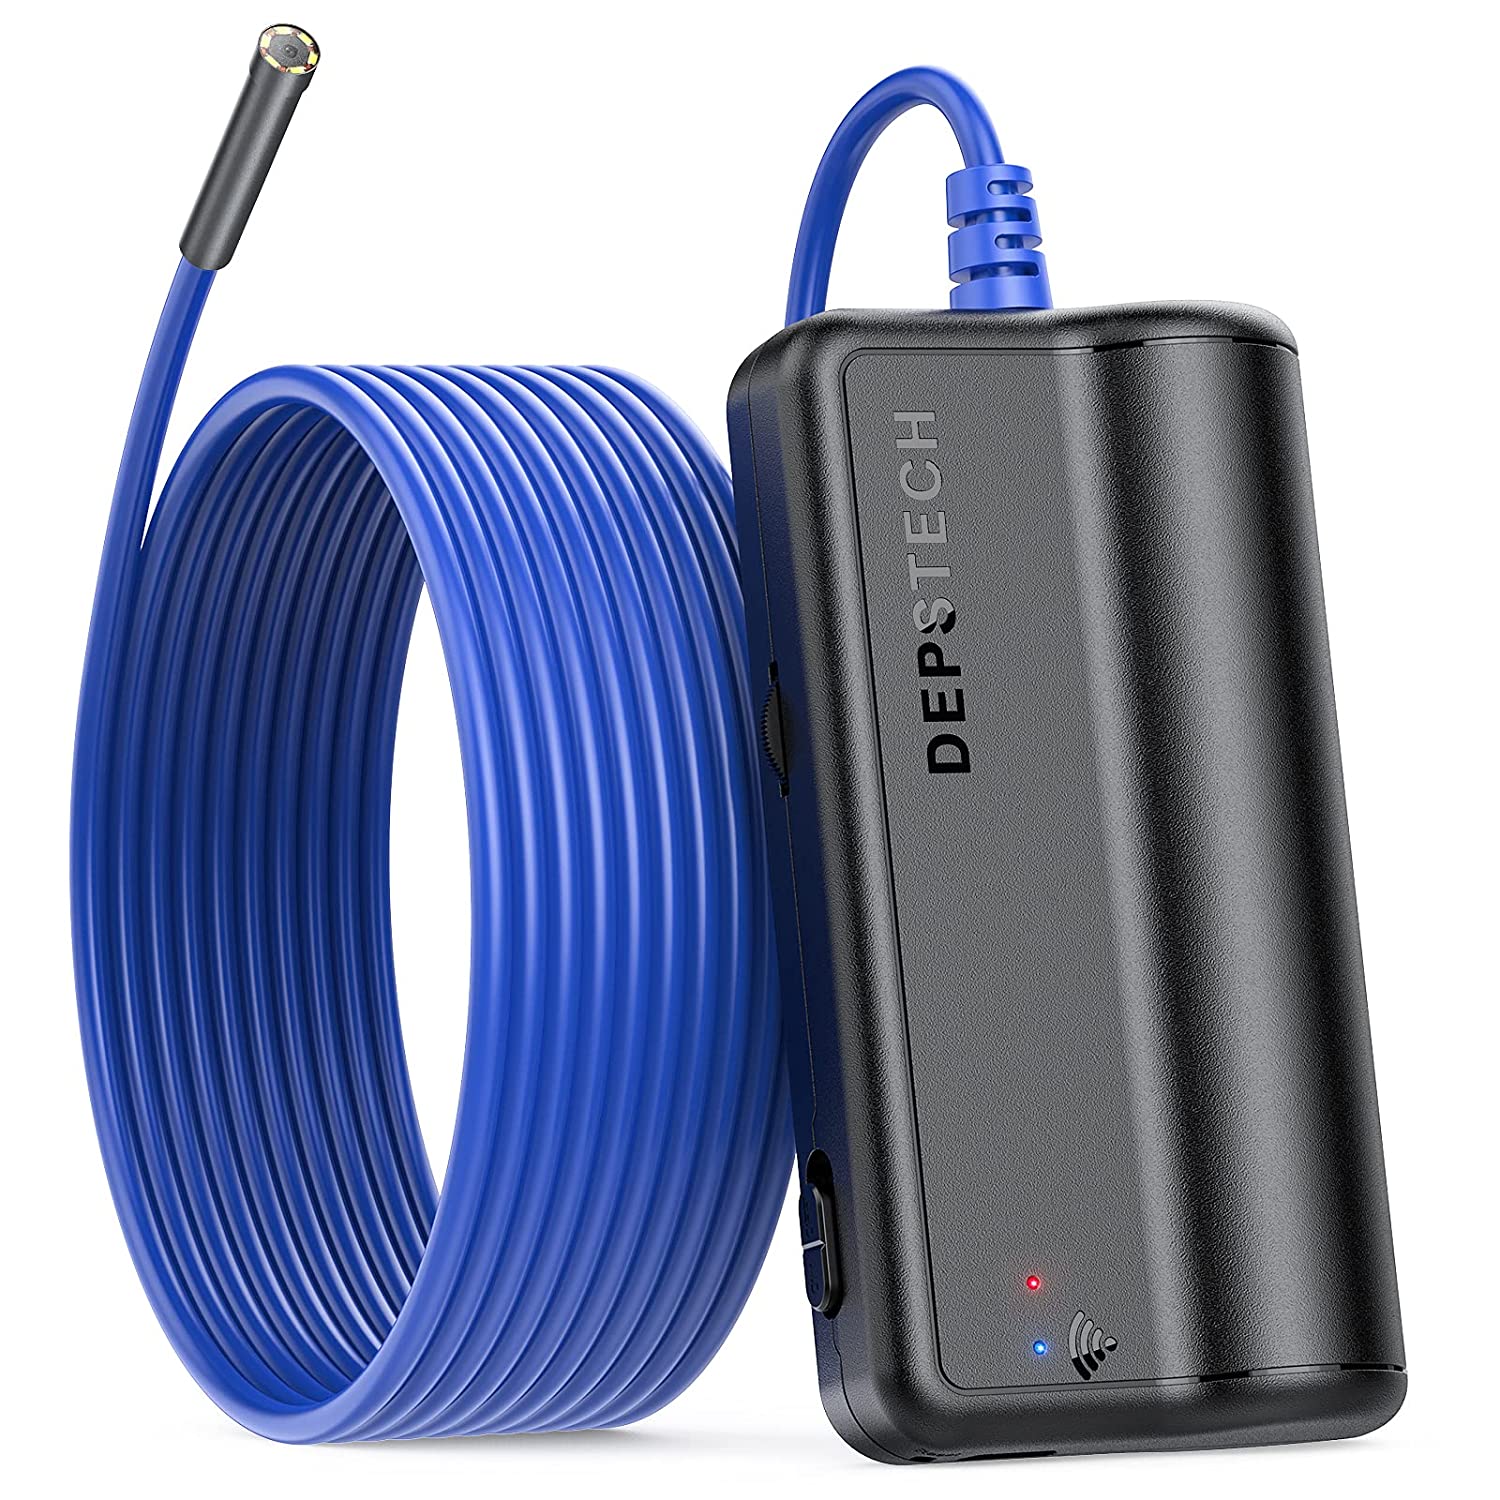 5.0MP USB Endoscope Sewer Camera - DEPSTECH Borescope